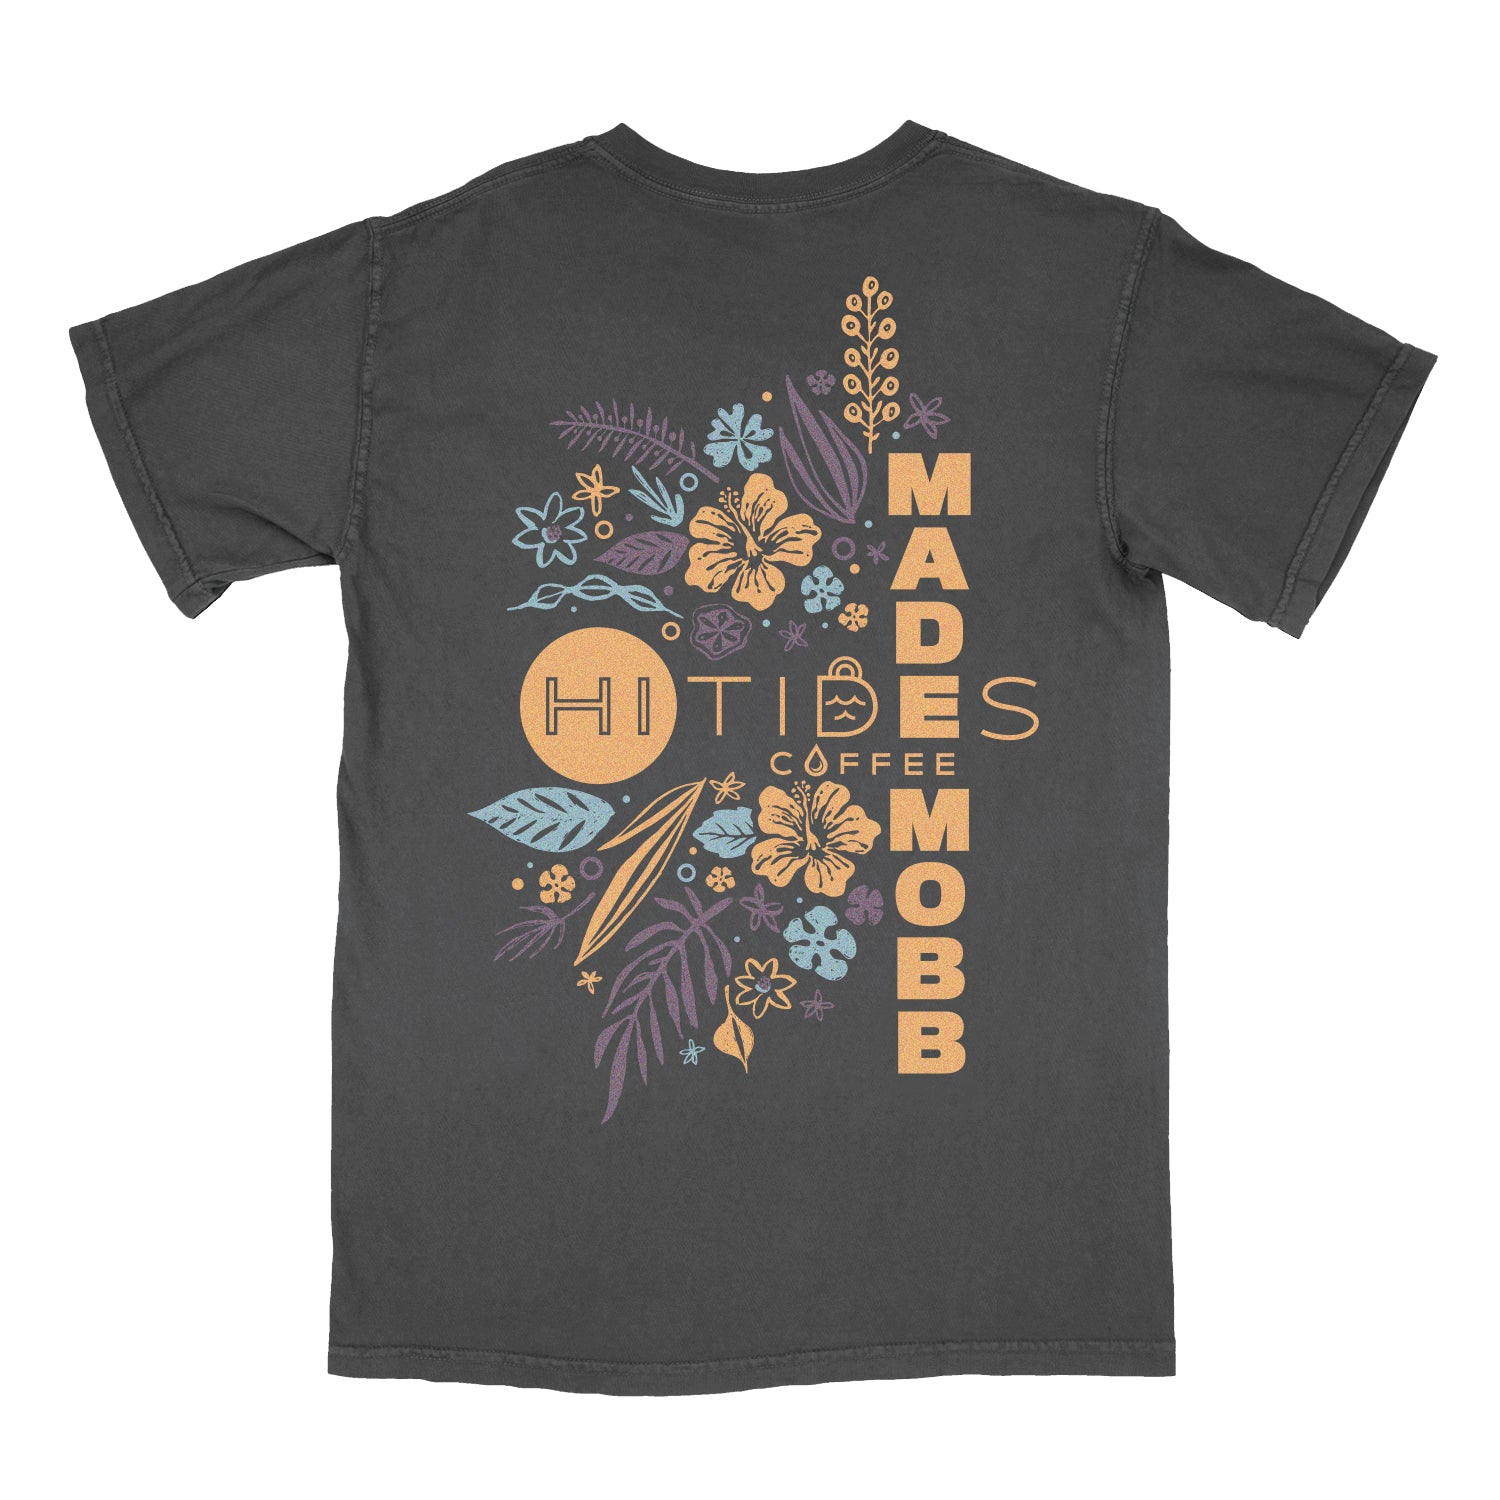 HI-TIDES X MADE MOBB - Hibiscus T-Shirt